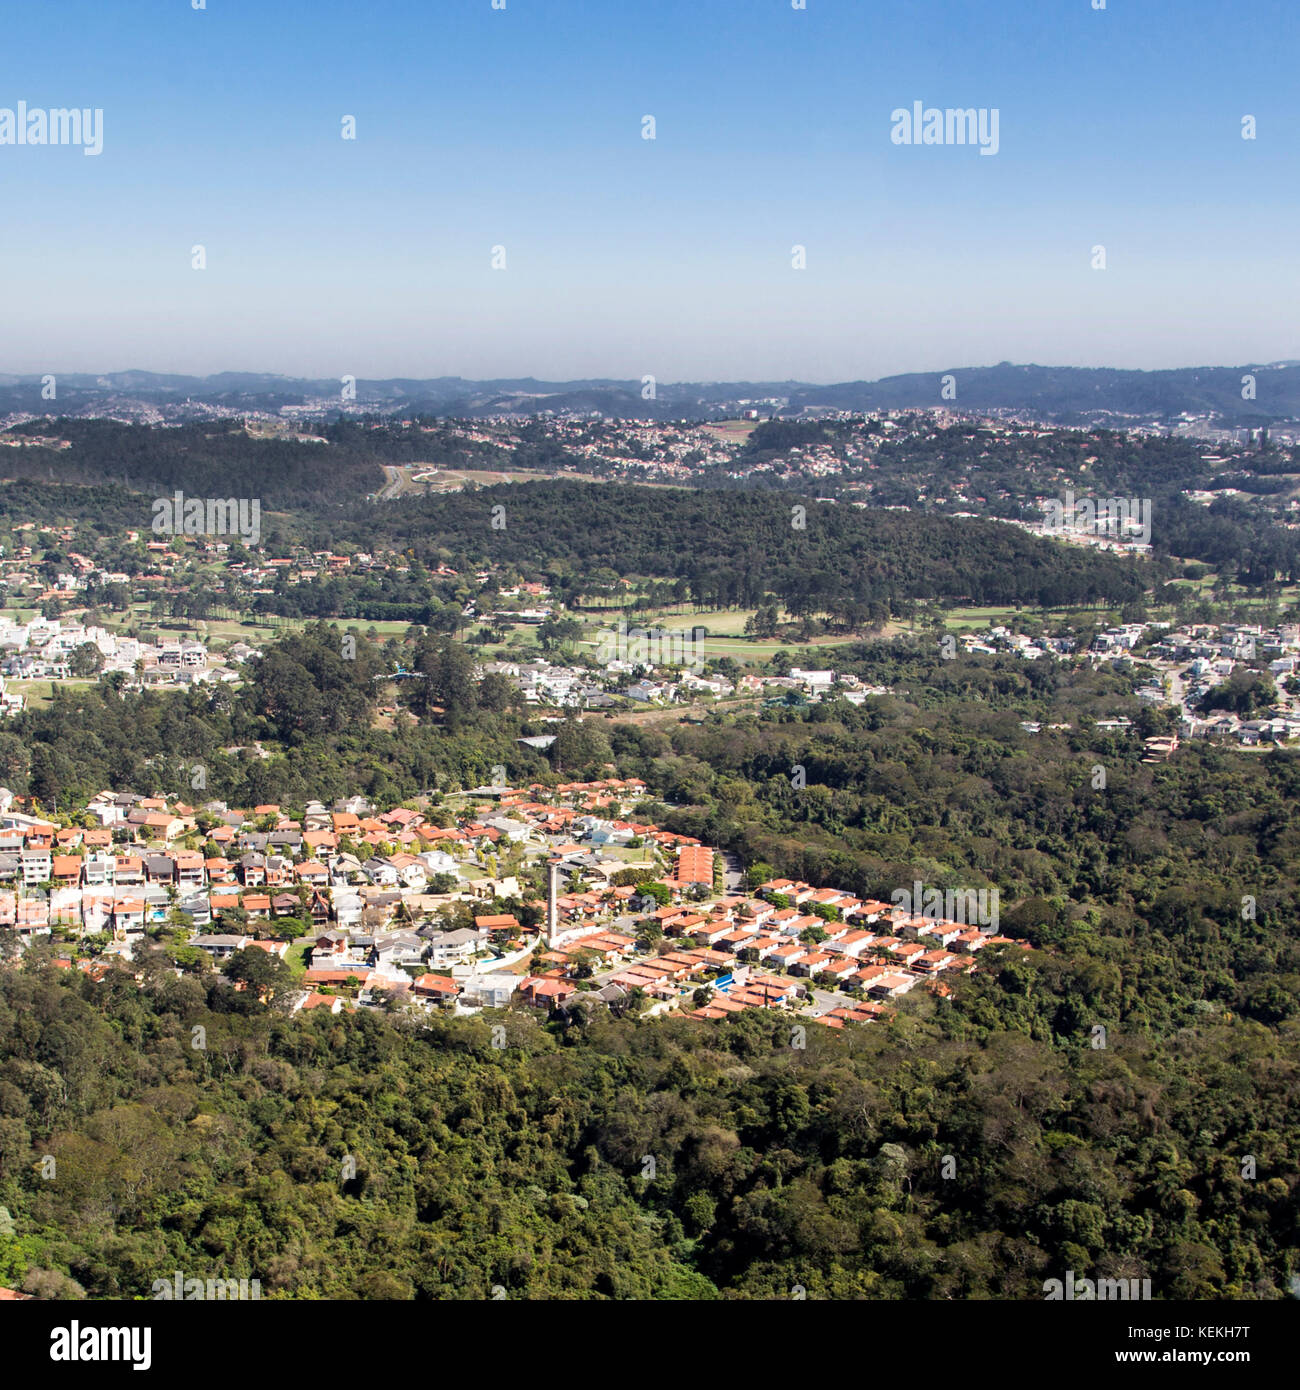 aerial view of sao paulo metropolitan region - brazil Stock Photo